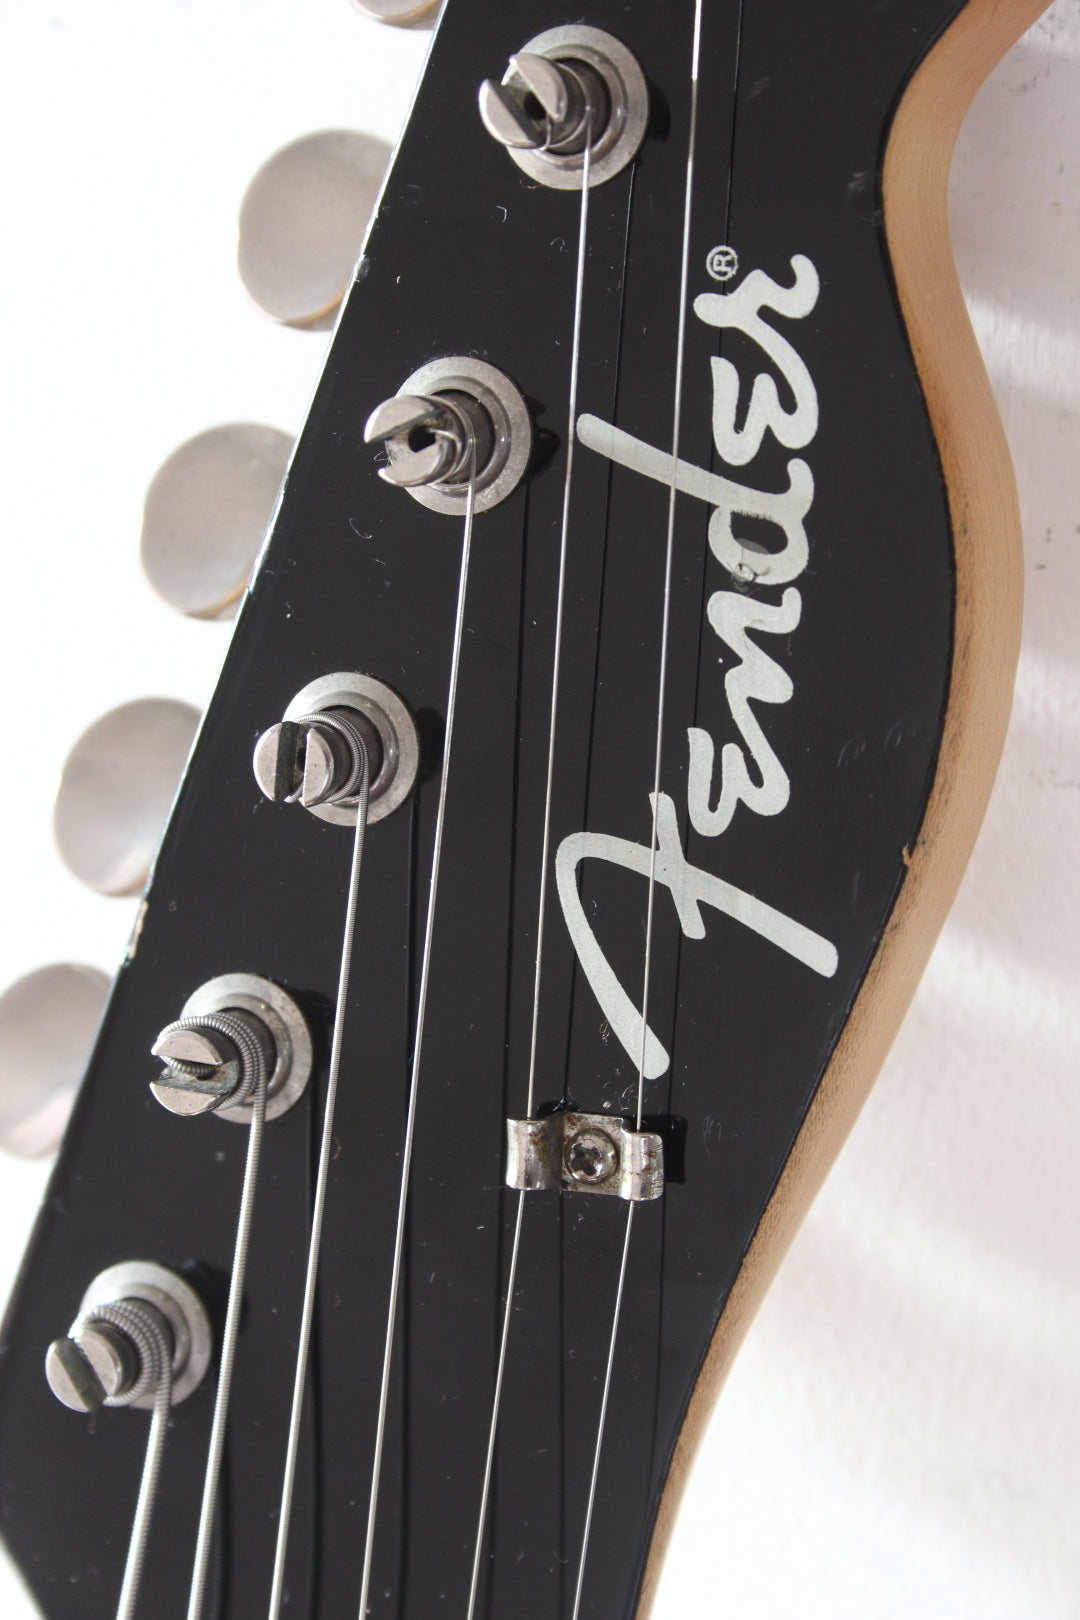 Fender Japan Aerodyne Telecaster ATL-78 Black 2004